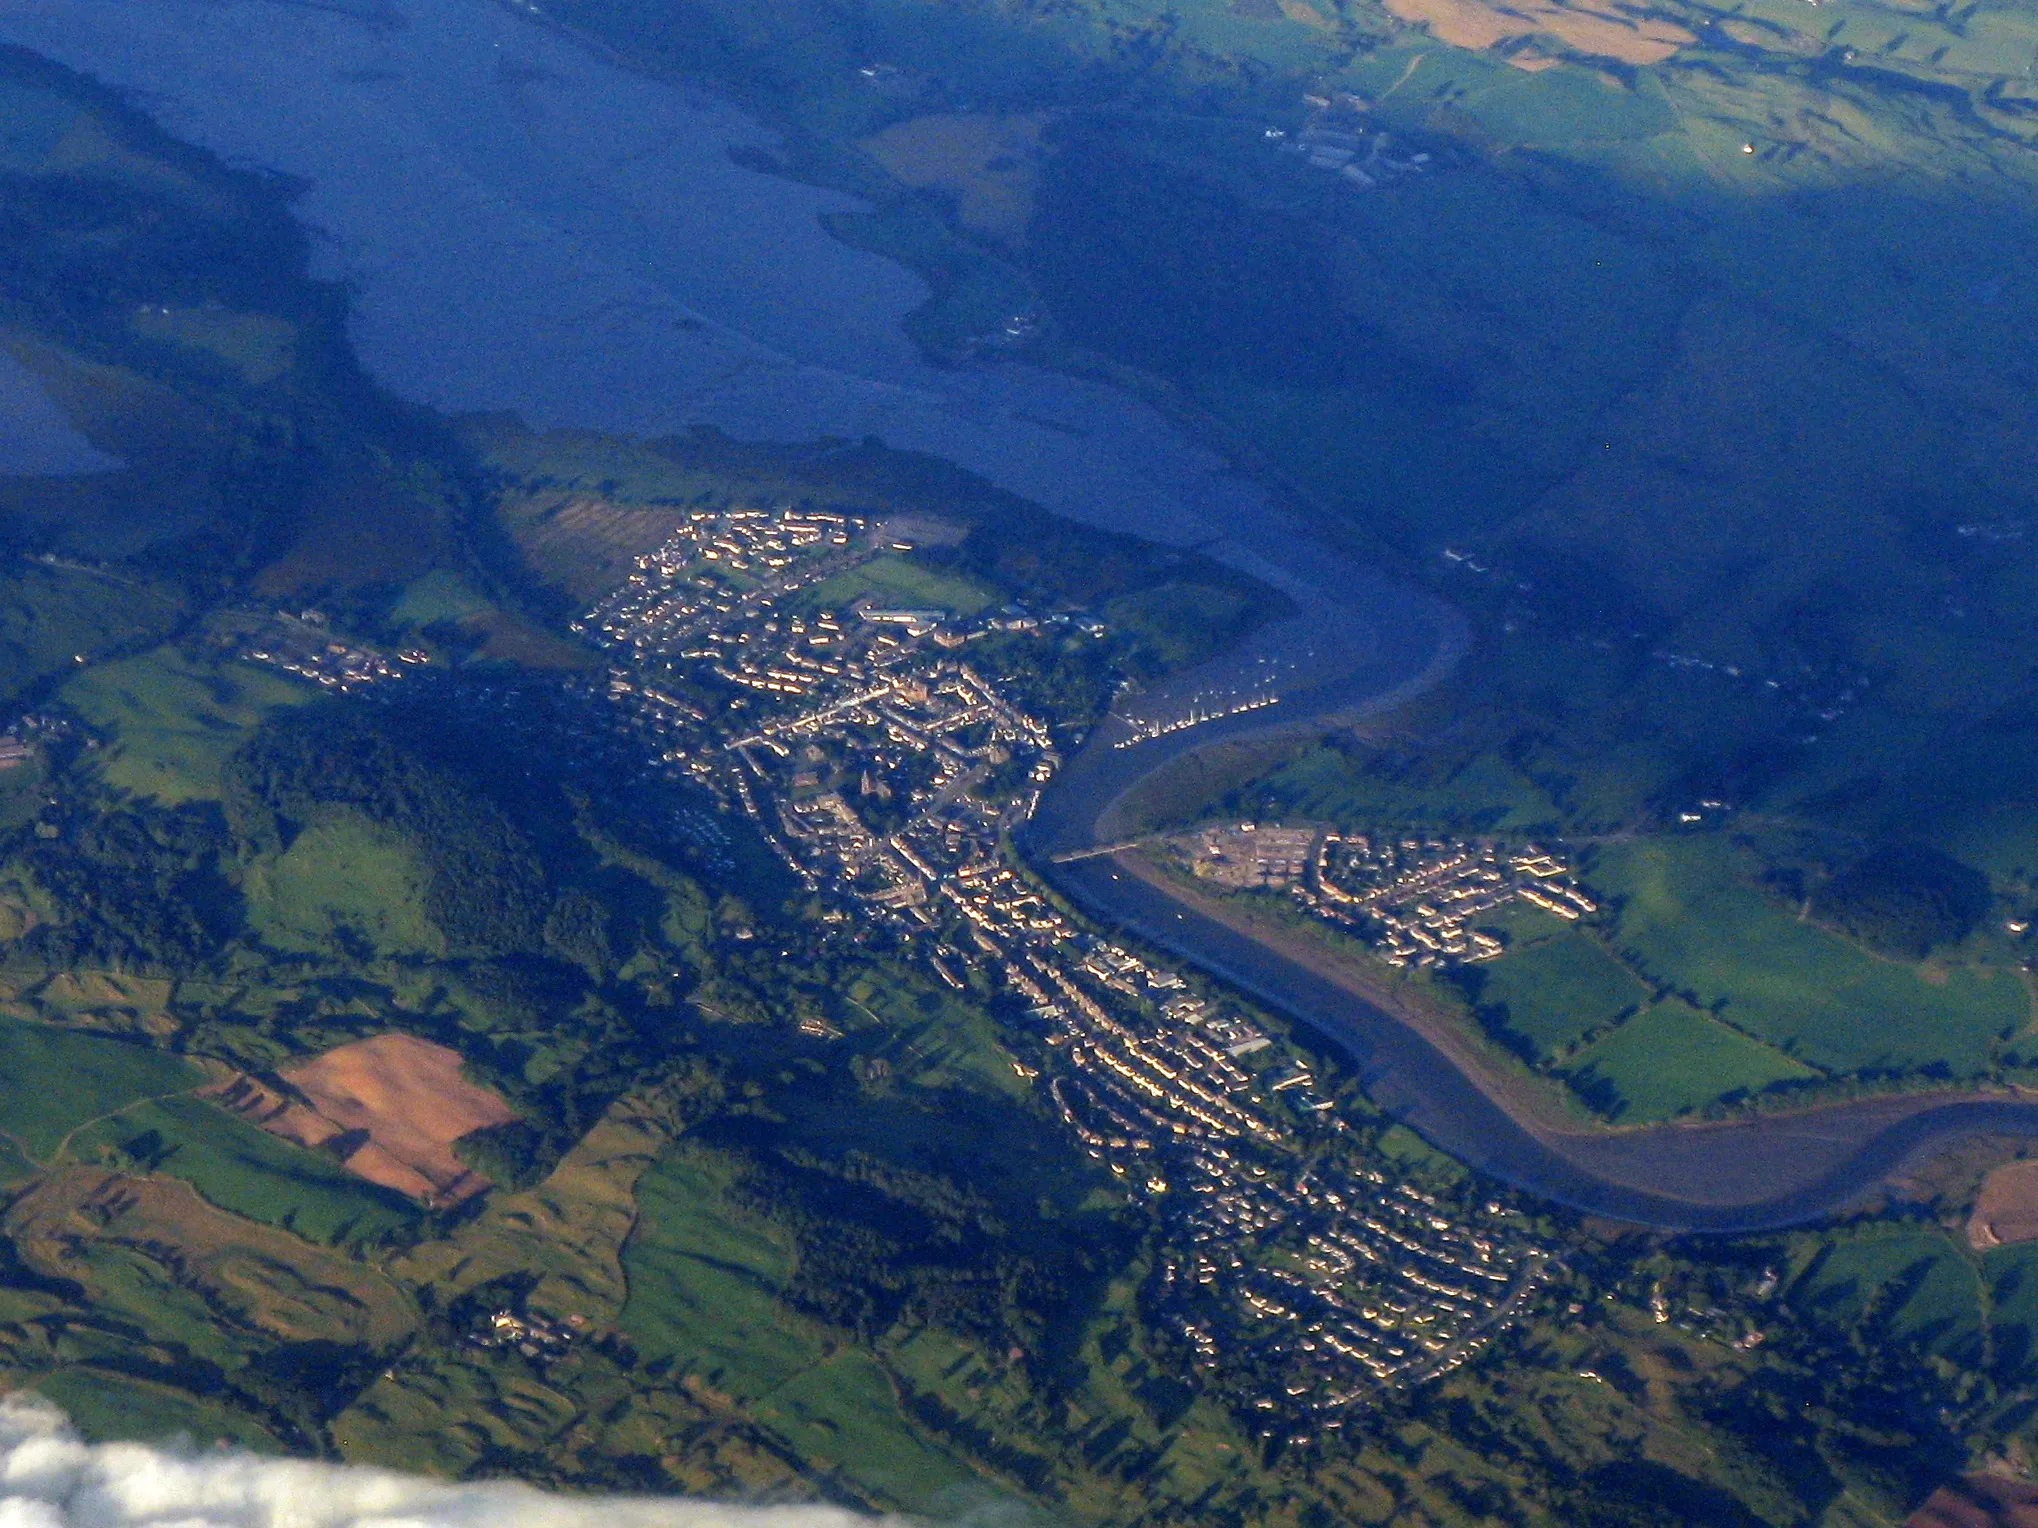 Image of Southern Scotland